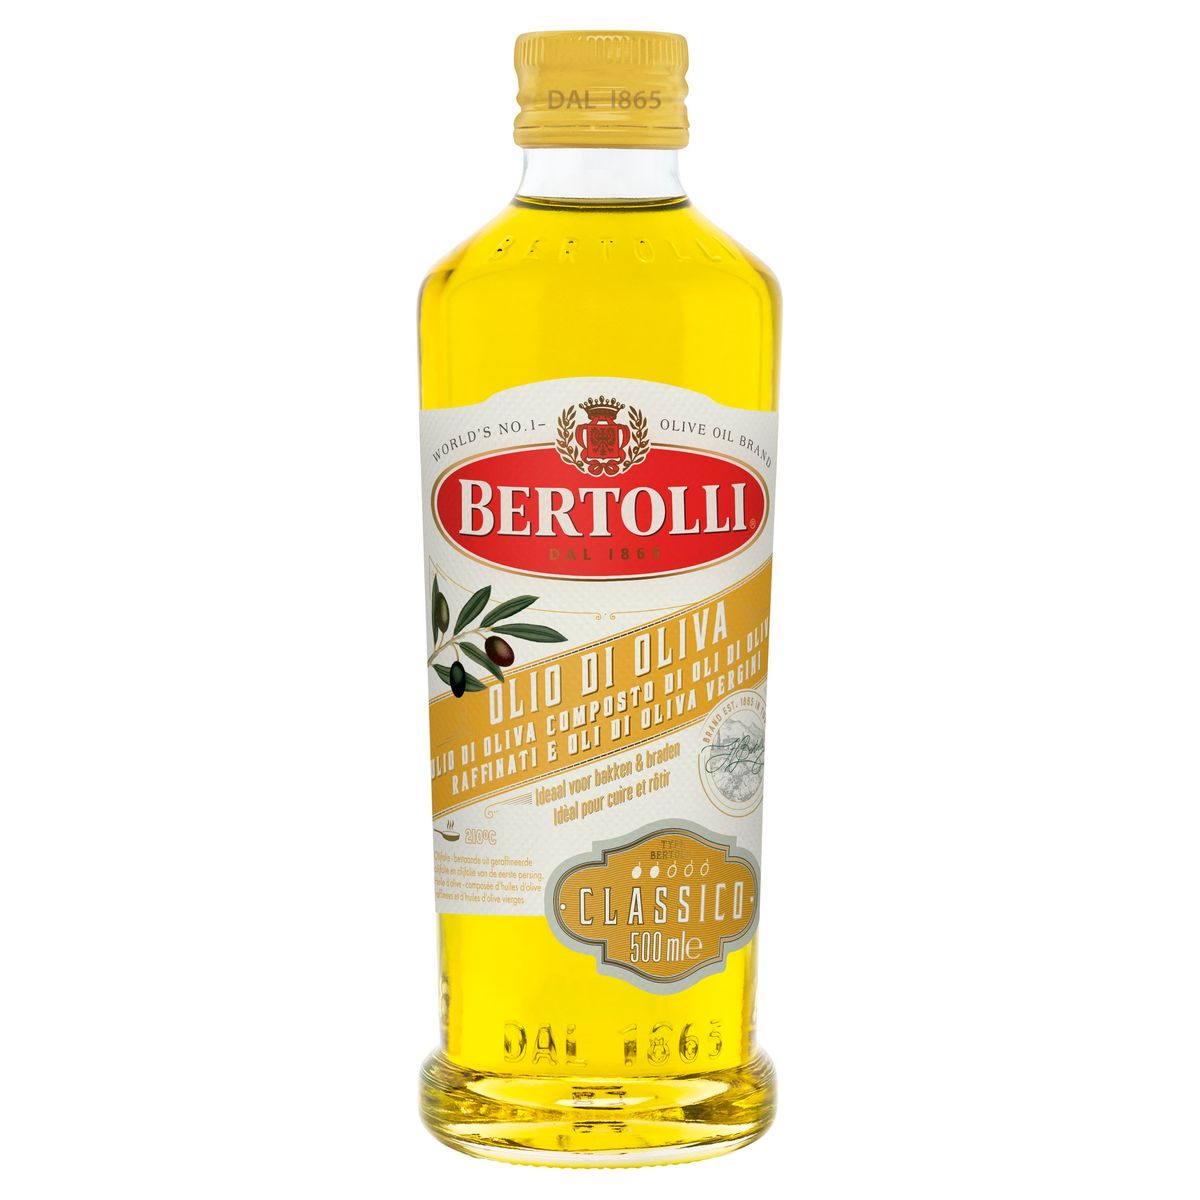 Bertolli huile d'olive classico 500 ml